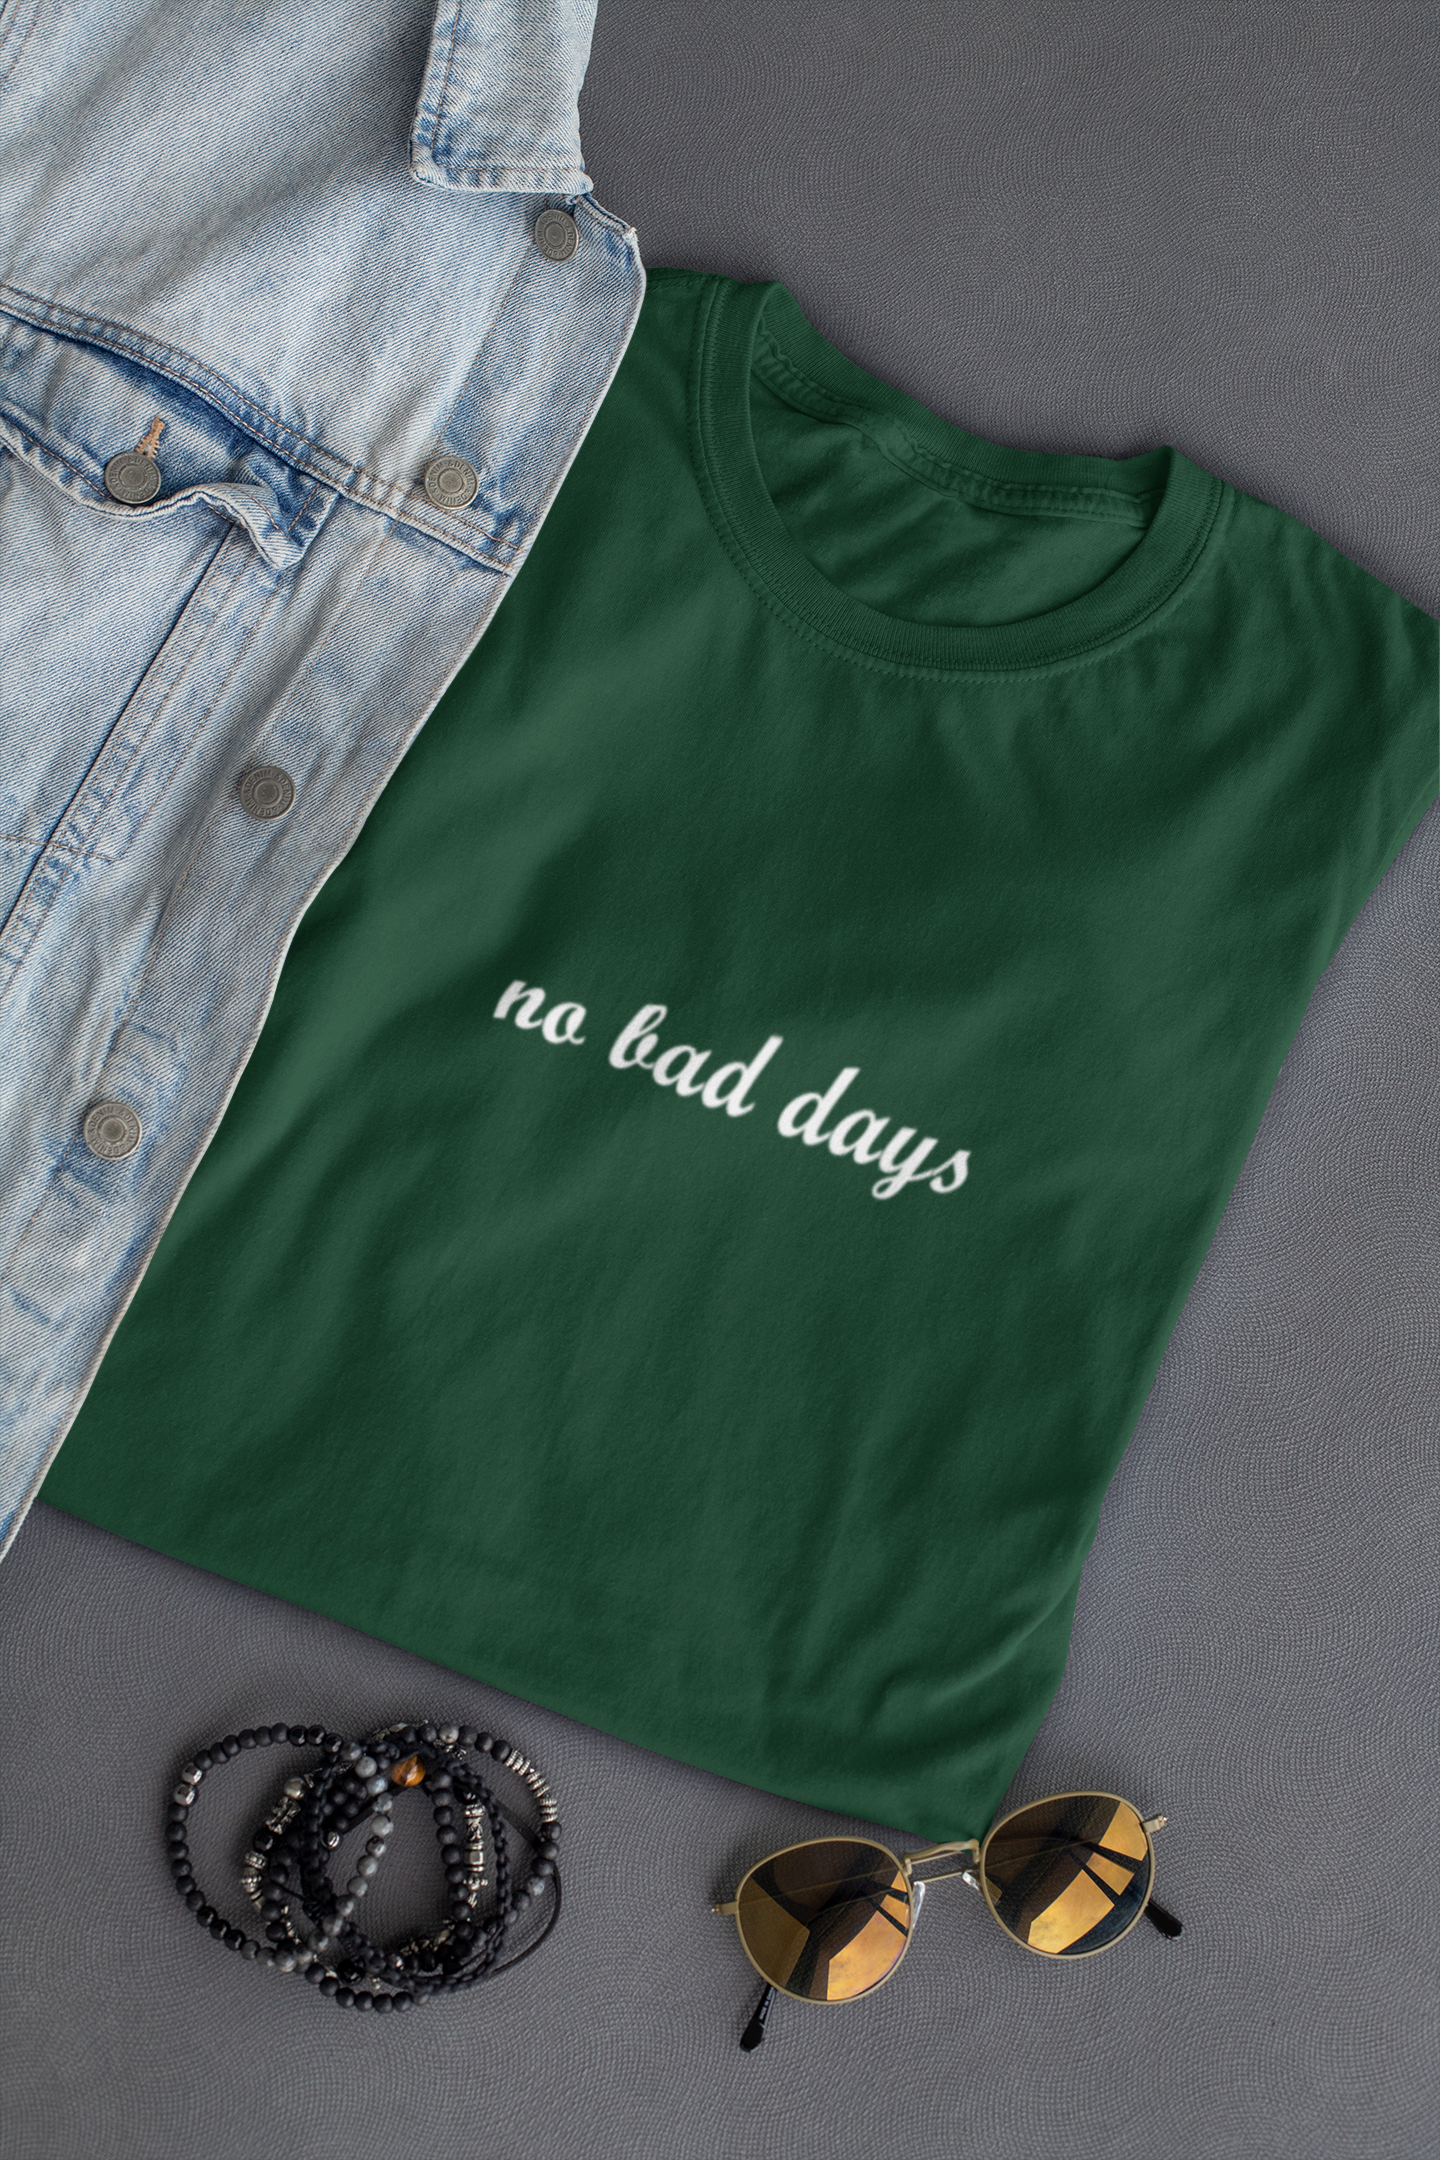 No Bad Days Minimal Mens Half Sleeves T-shirt- FunkyTeesClub